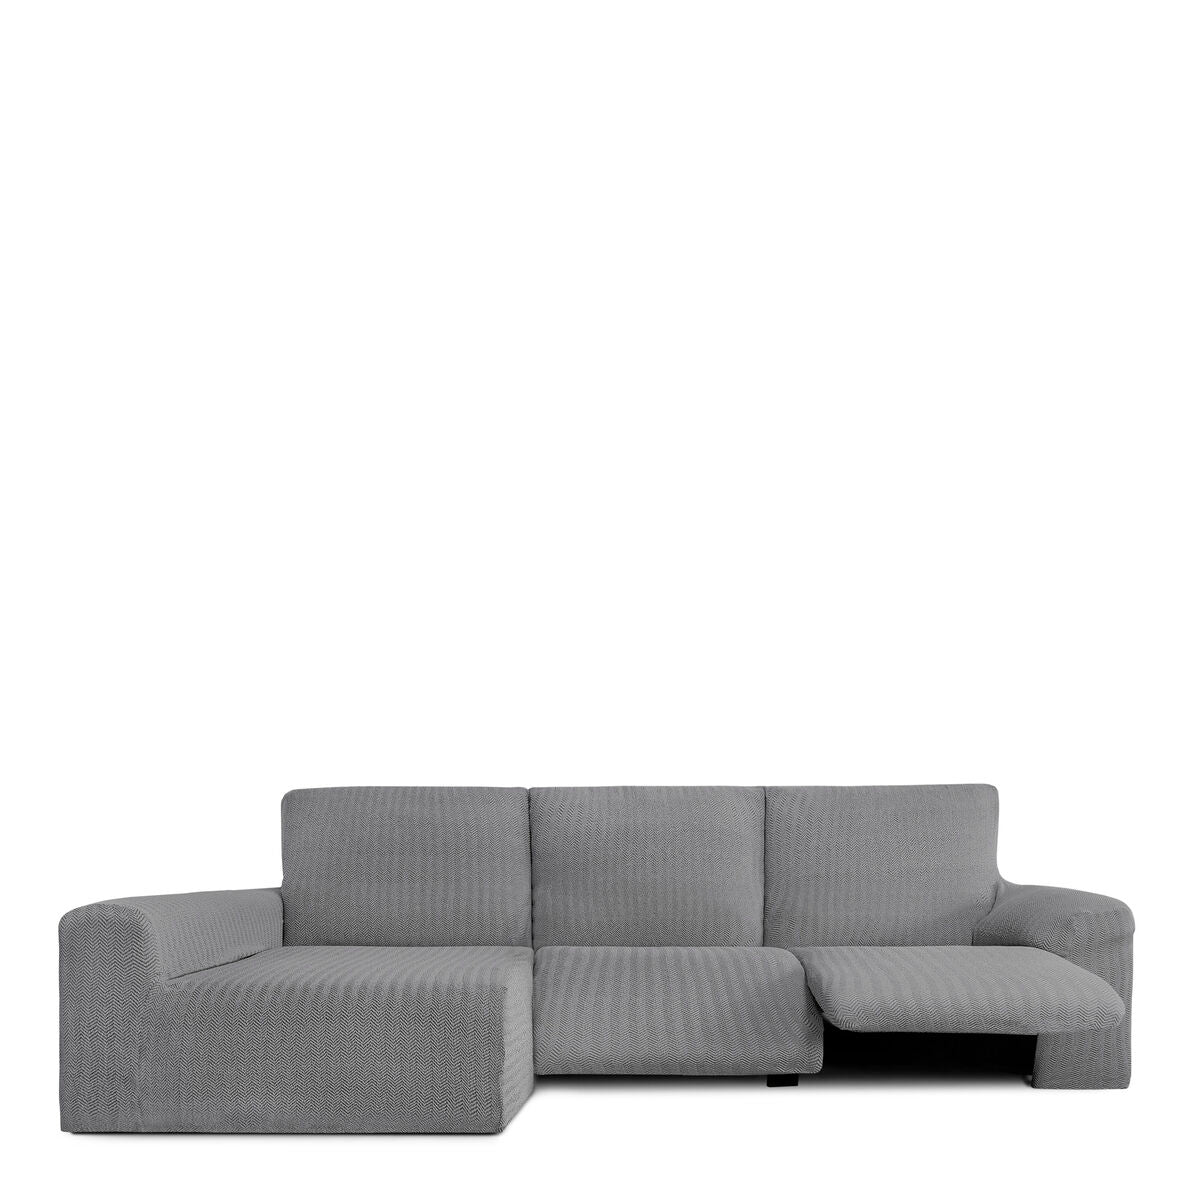 Copertura per sedia a lunghezza a sinistra lunga Eysa jaz grigio 180 x 120 x 360 cm